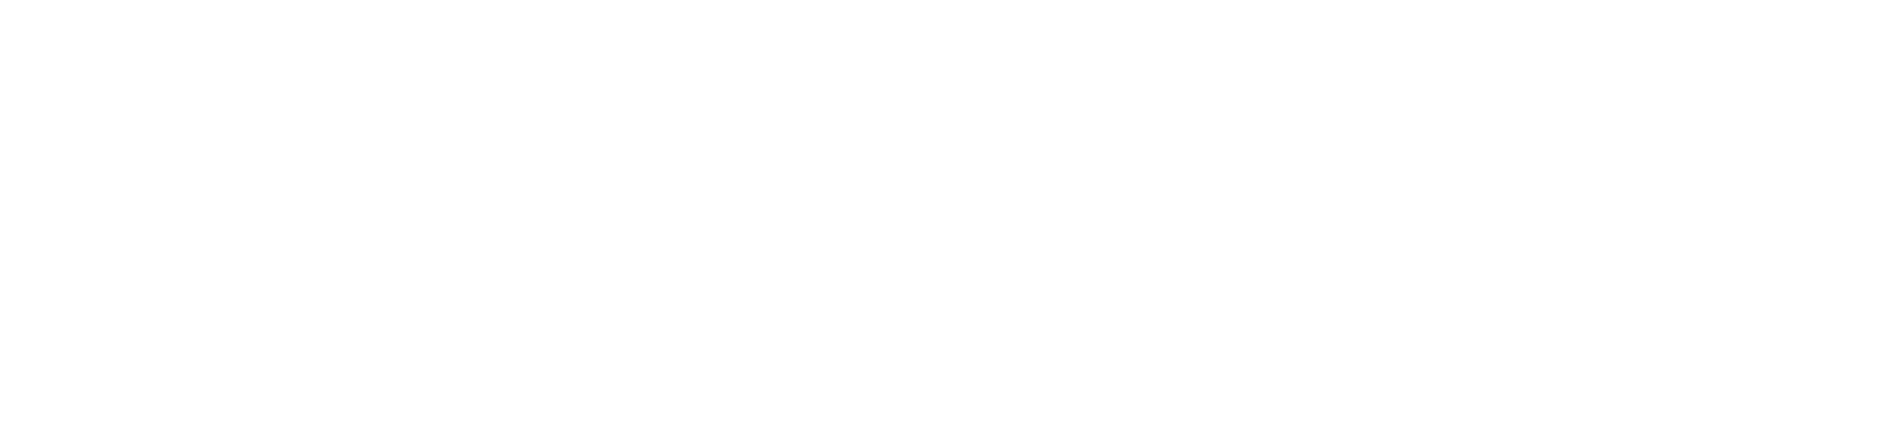 Mc Boxing Illustration